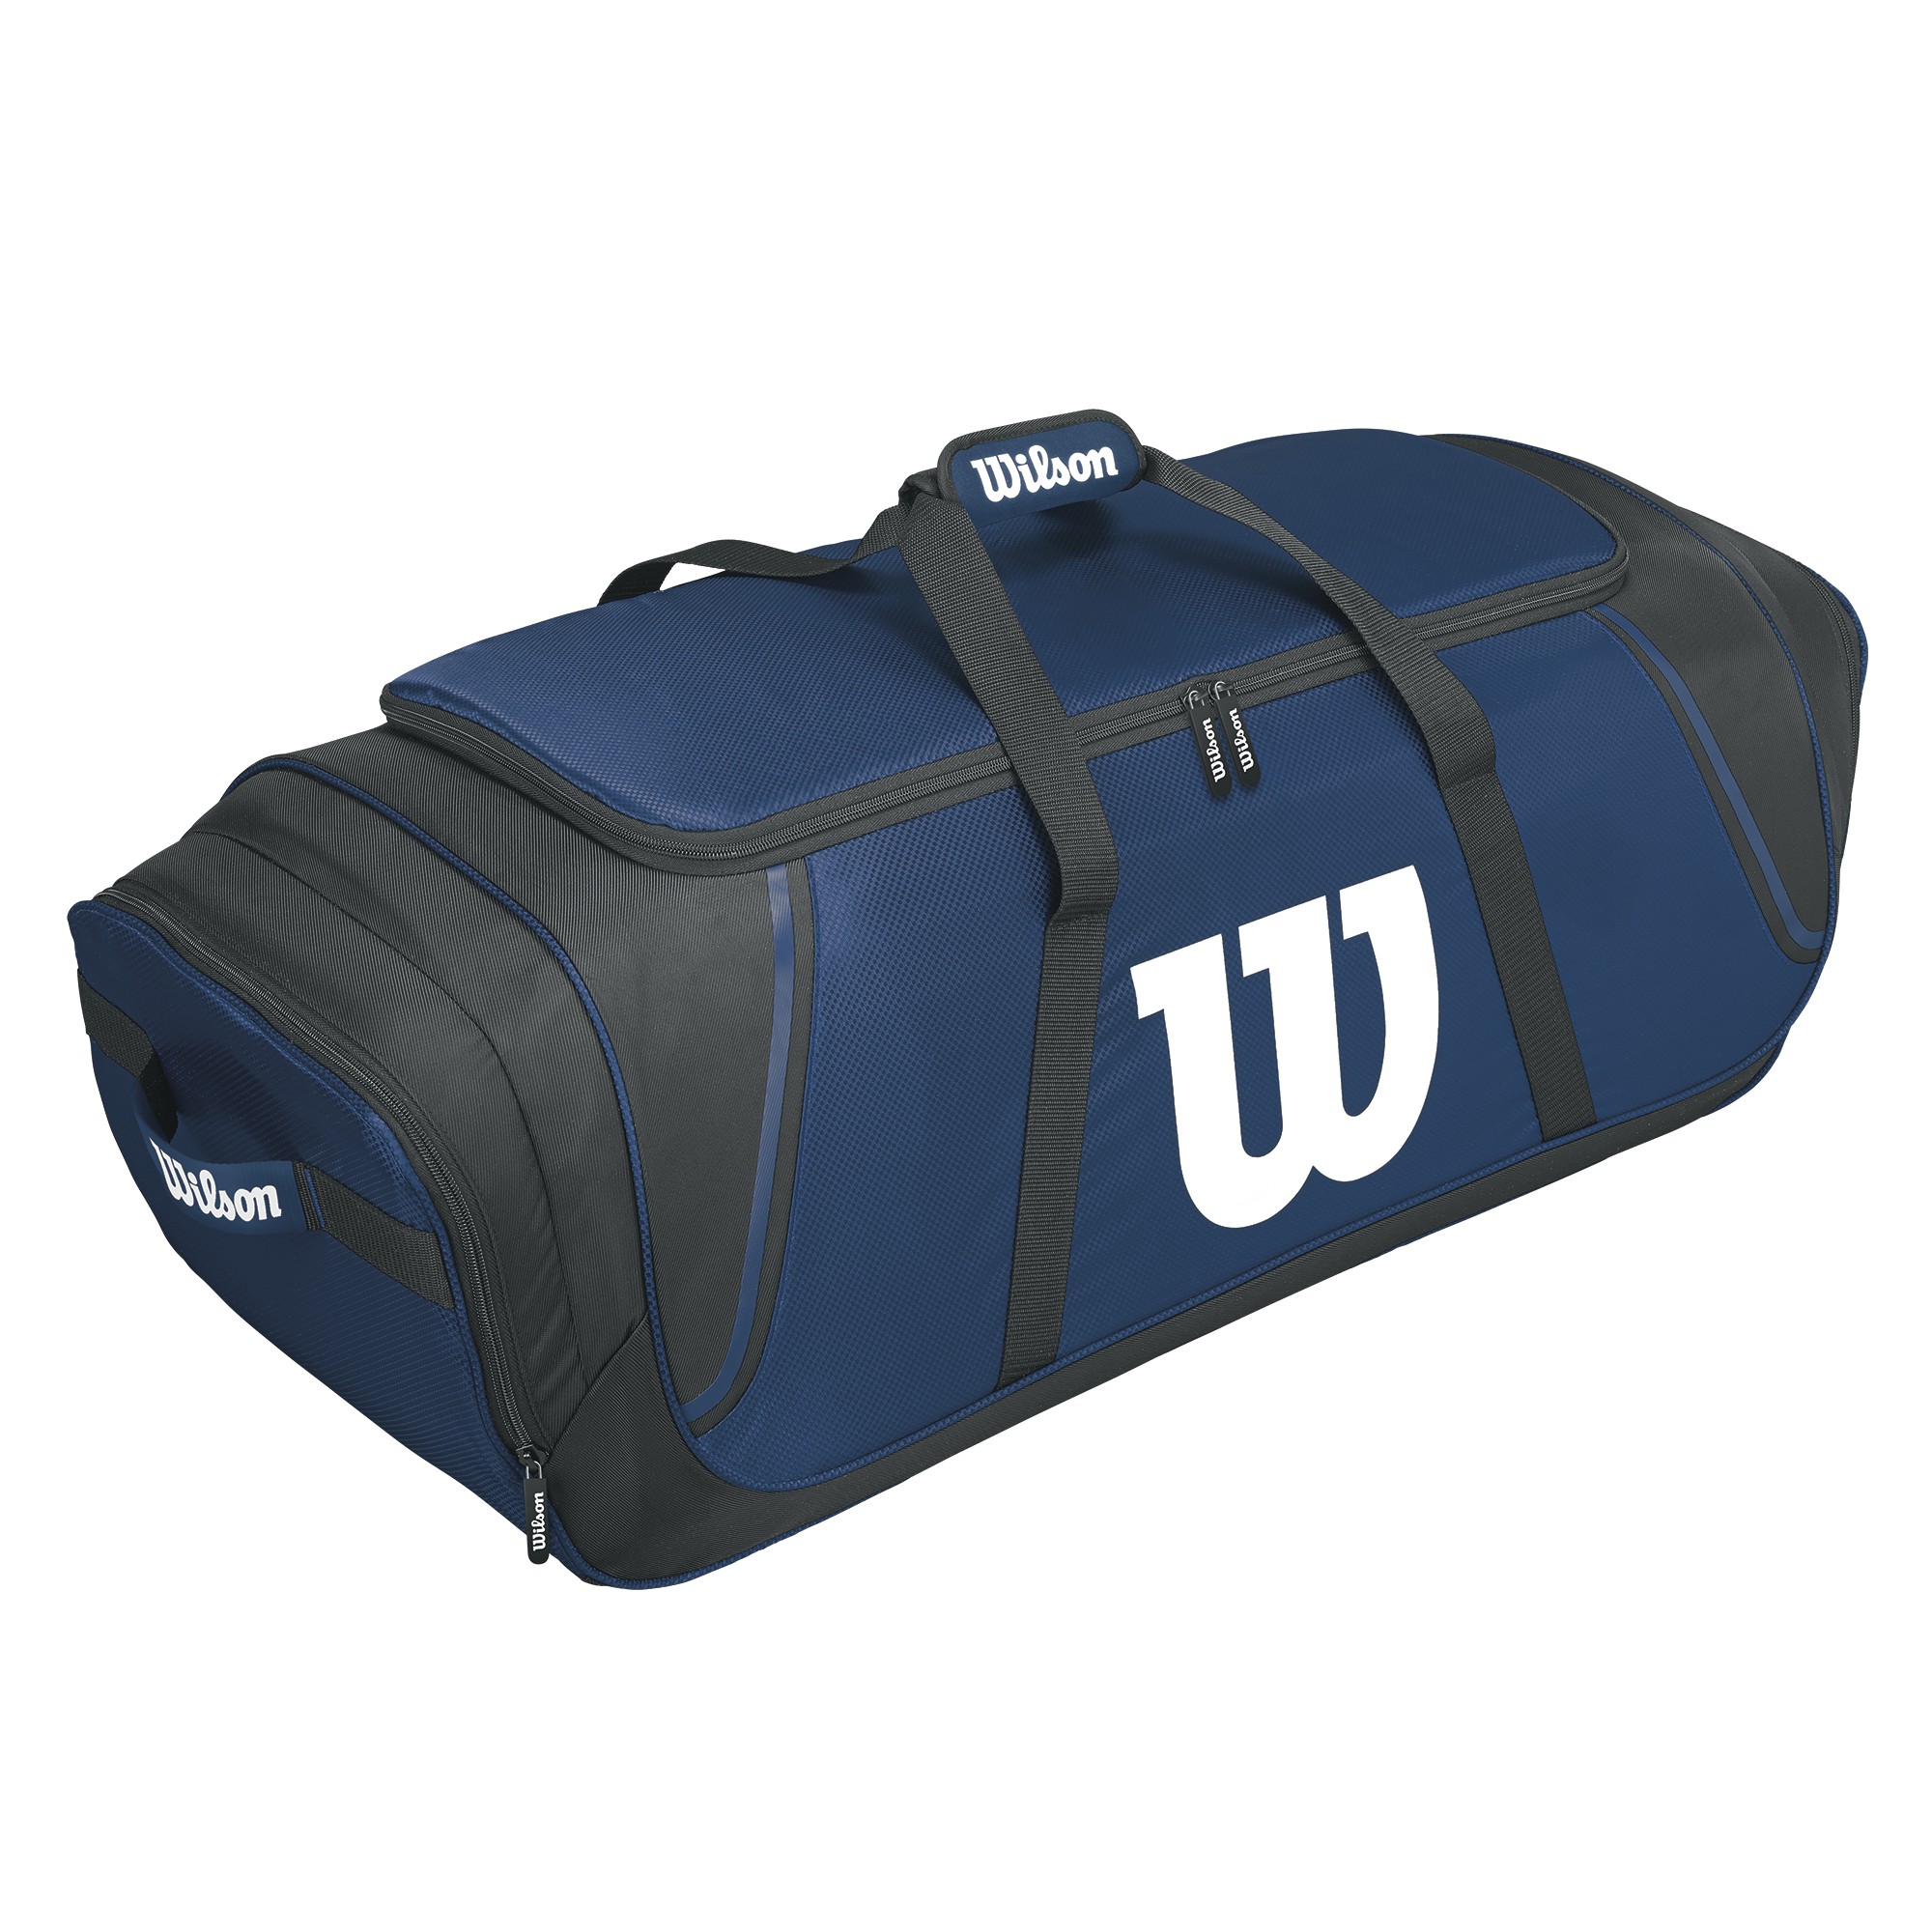 Wilson Team Gear Bag, Navy - image 1 of 2